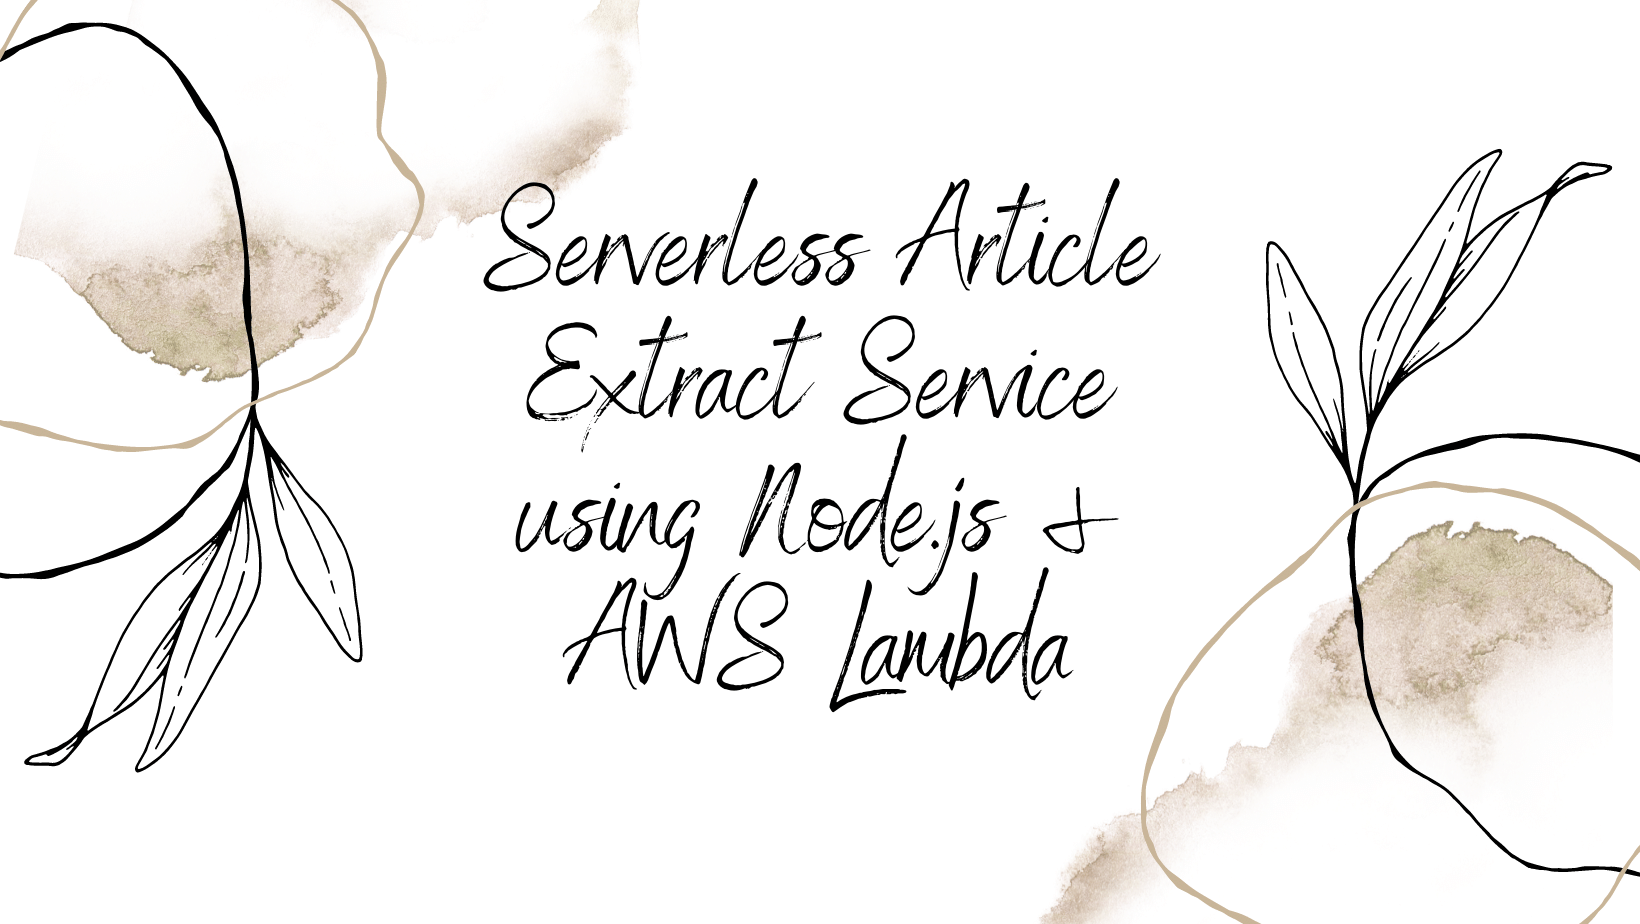 Serverless Article Extract Service using Node.js & AWS Lambda